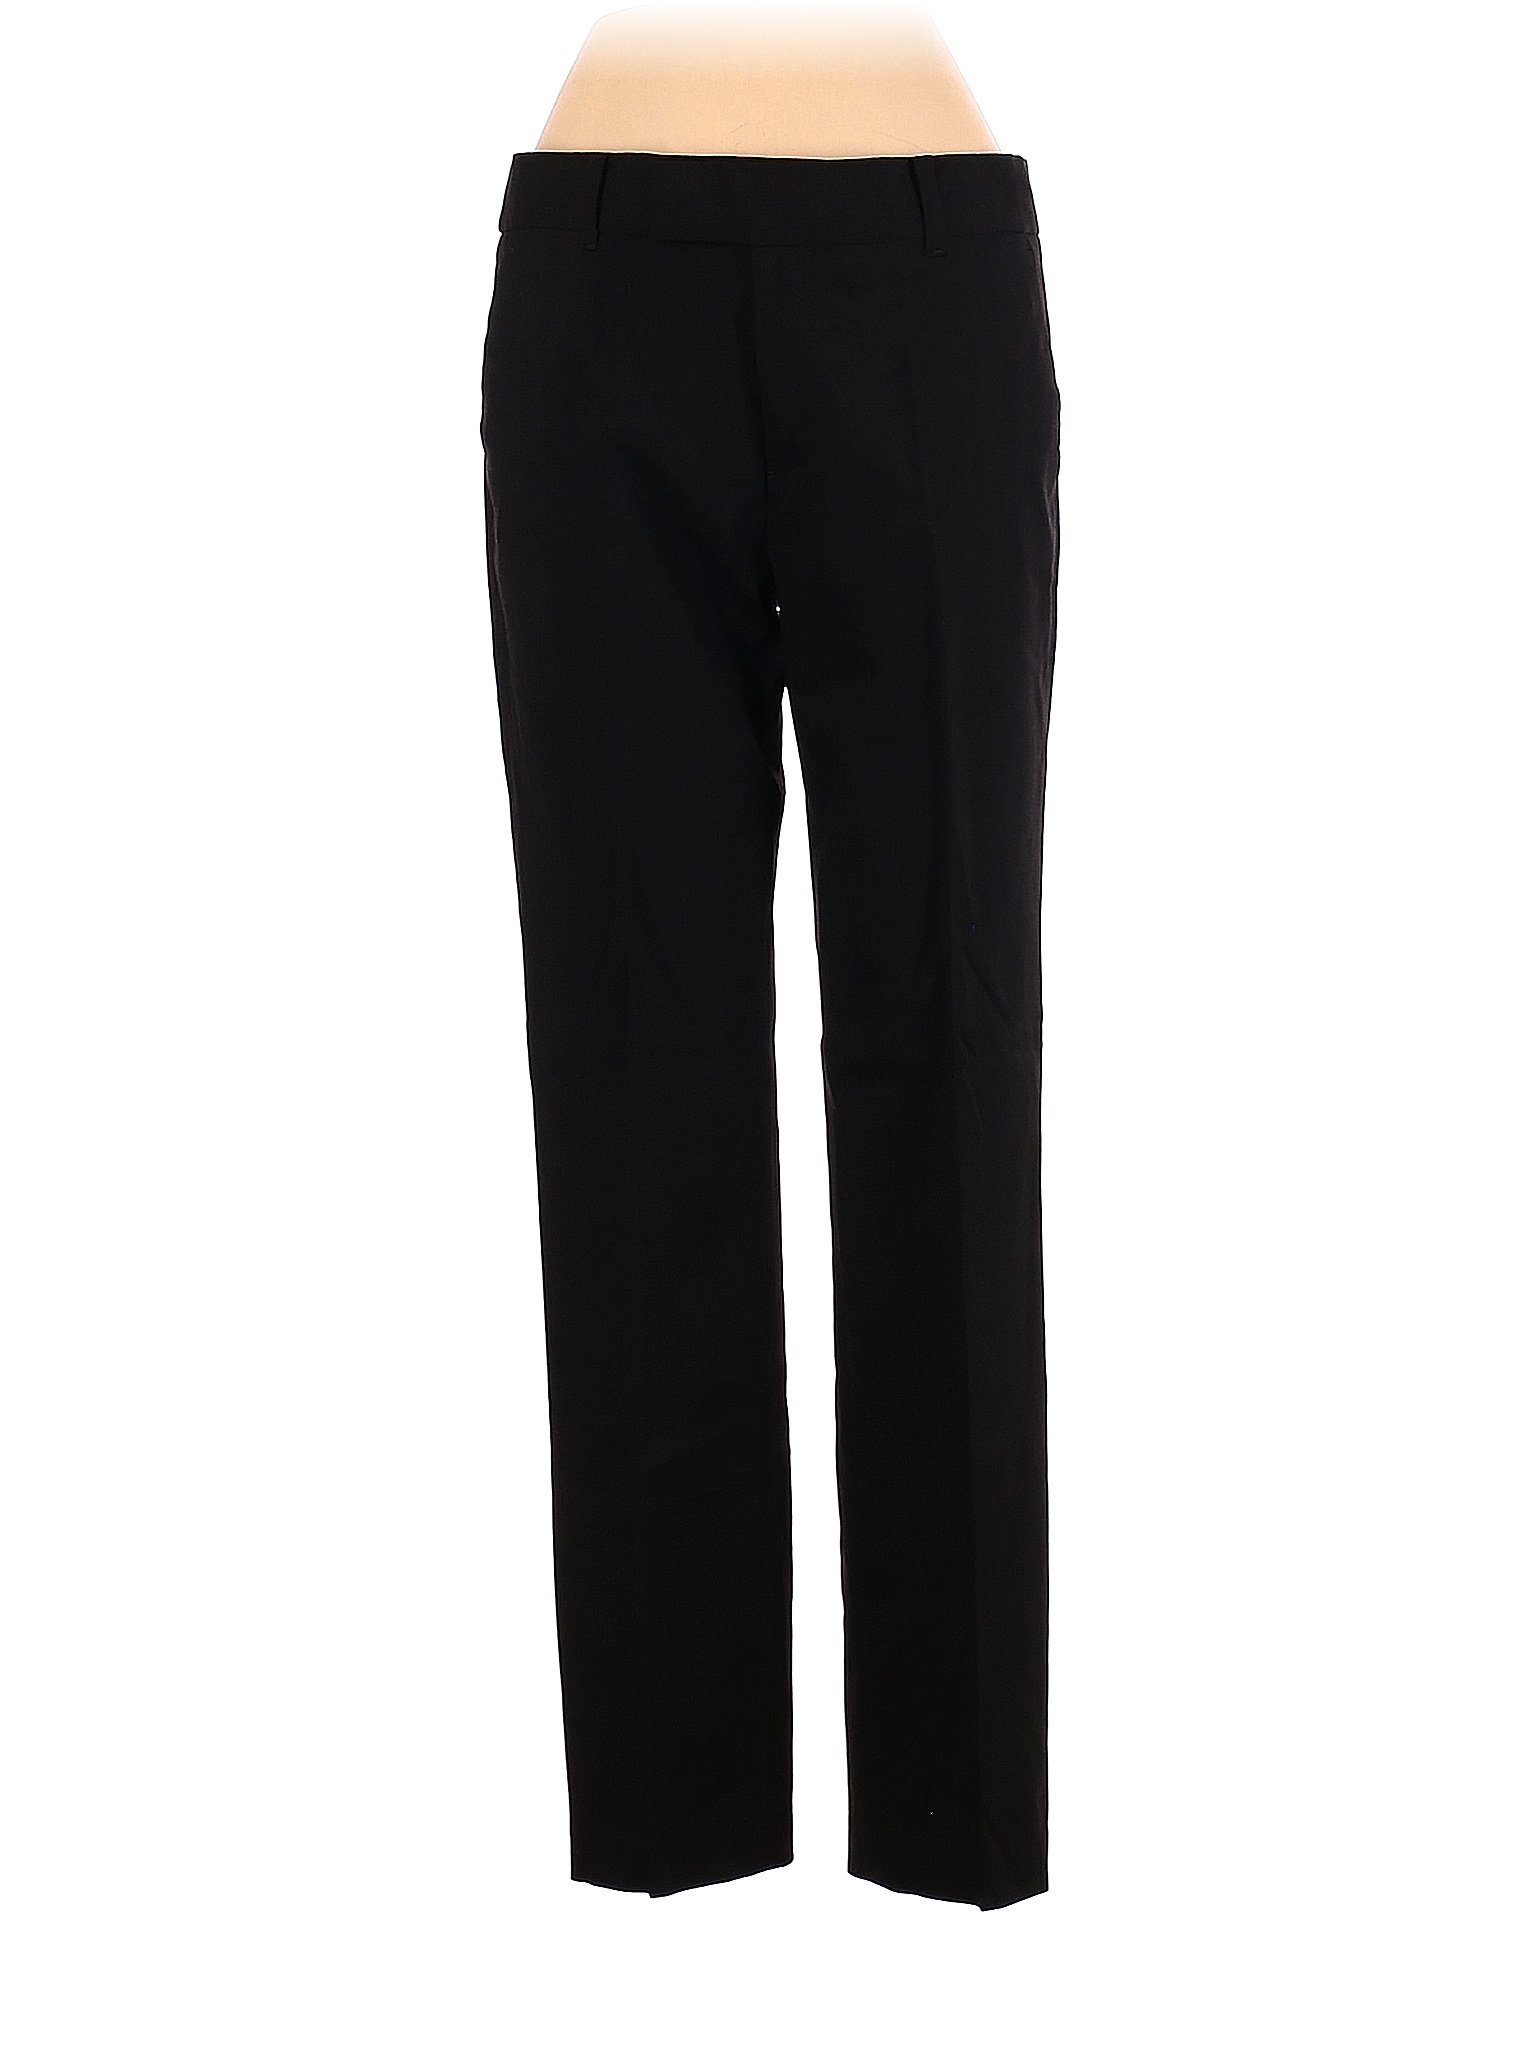 Uniqlo Solid Black Dress Pants Size XS - 67% off | thredUP